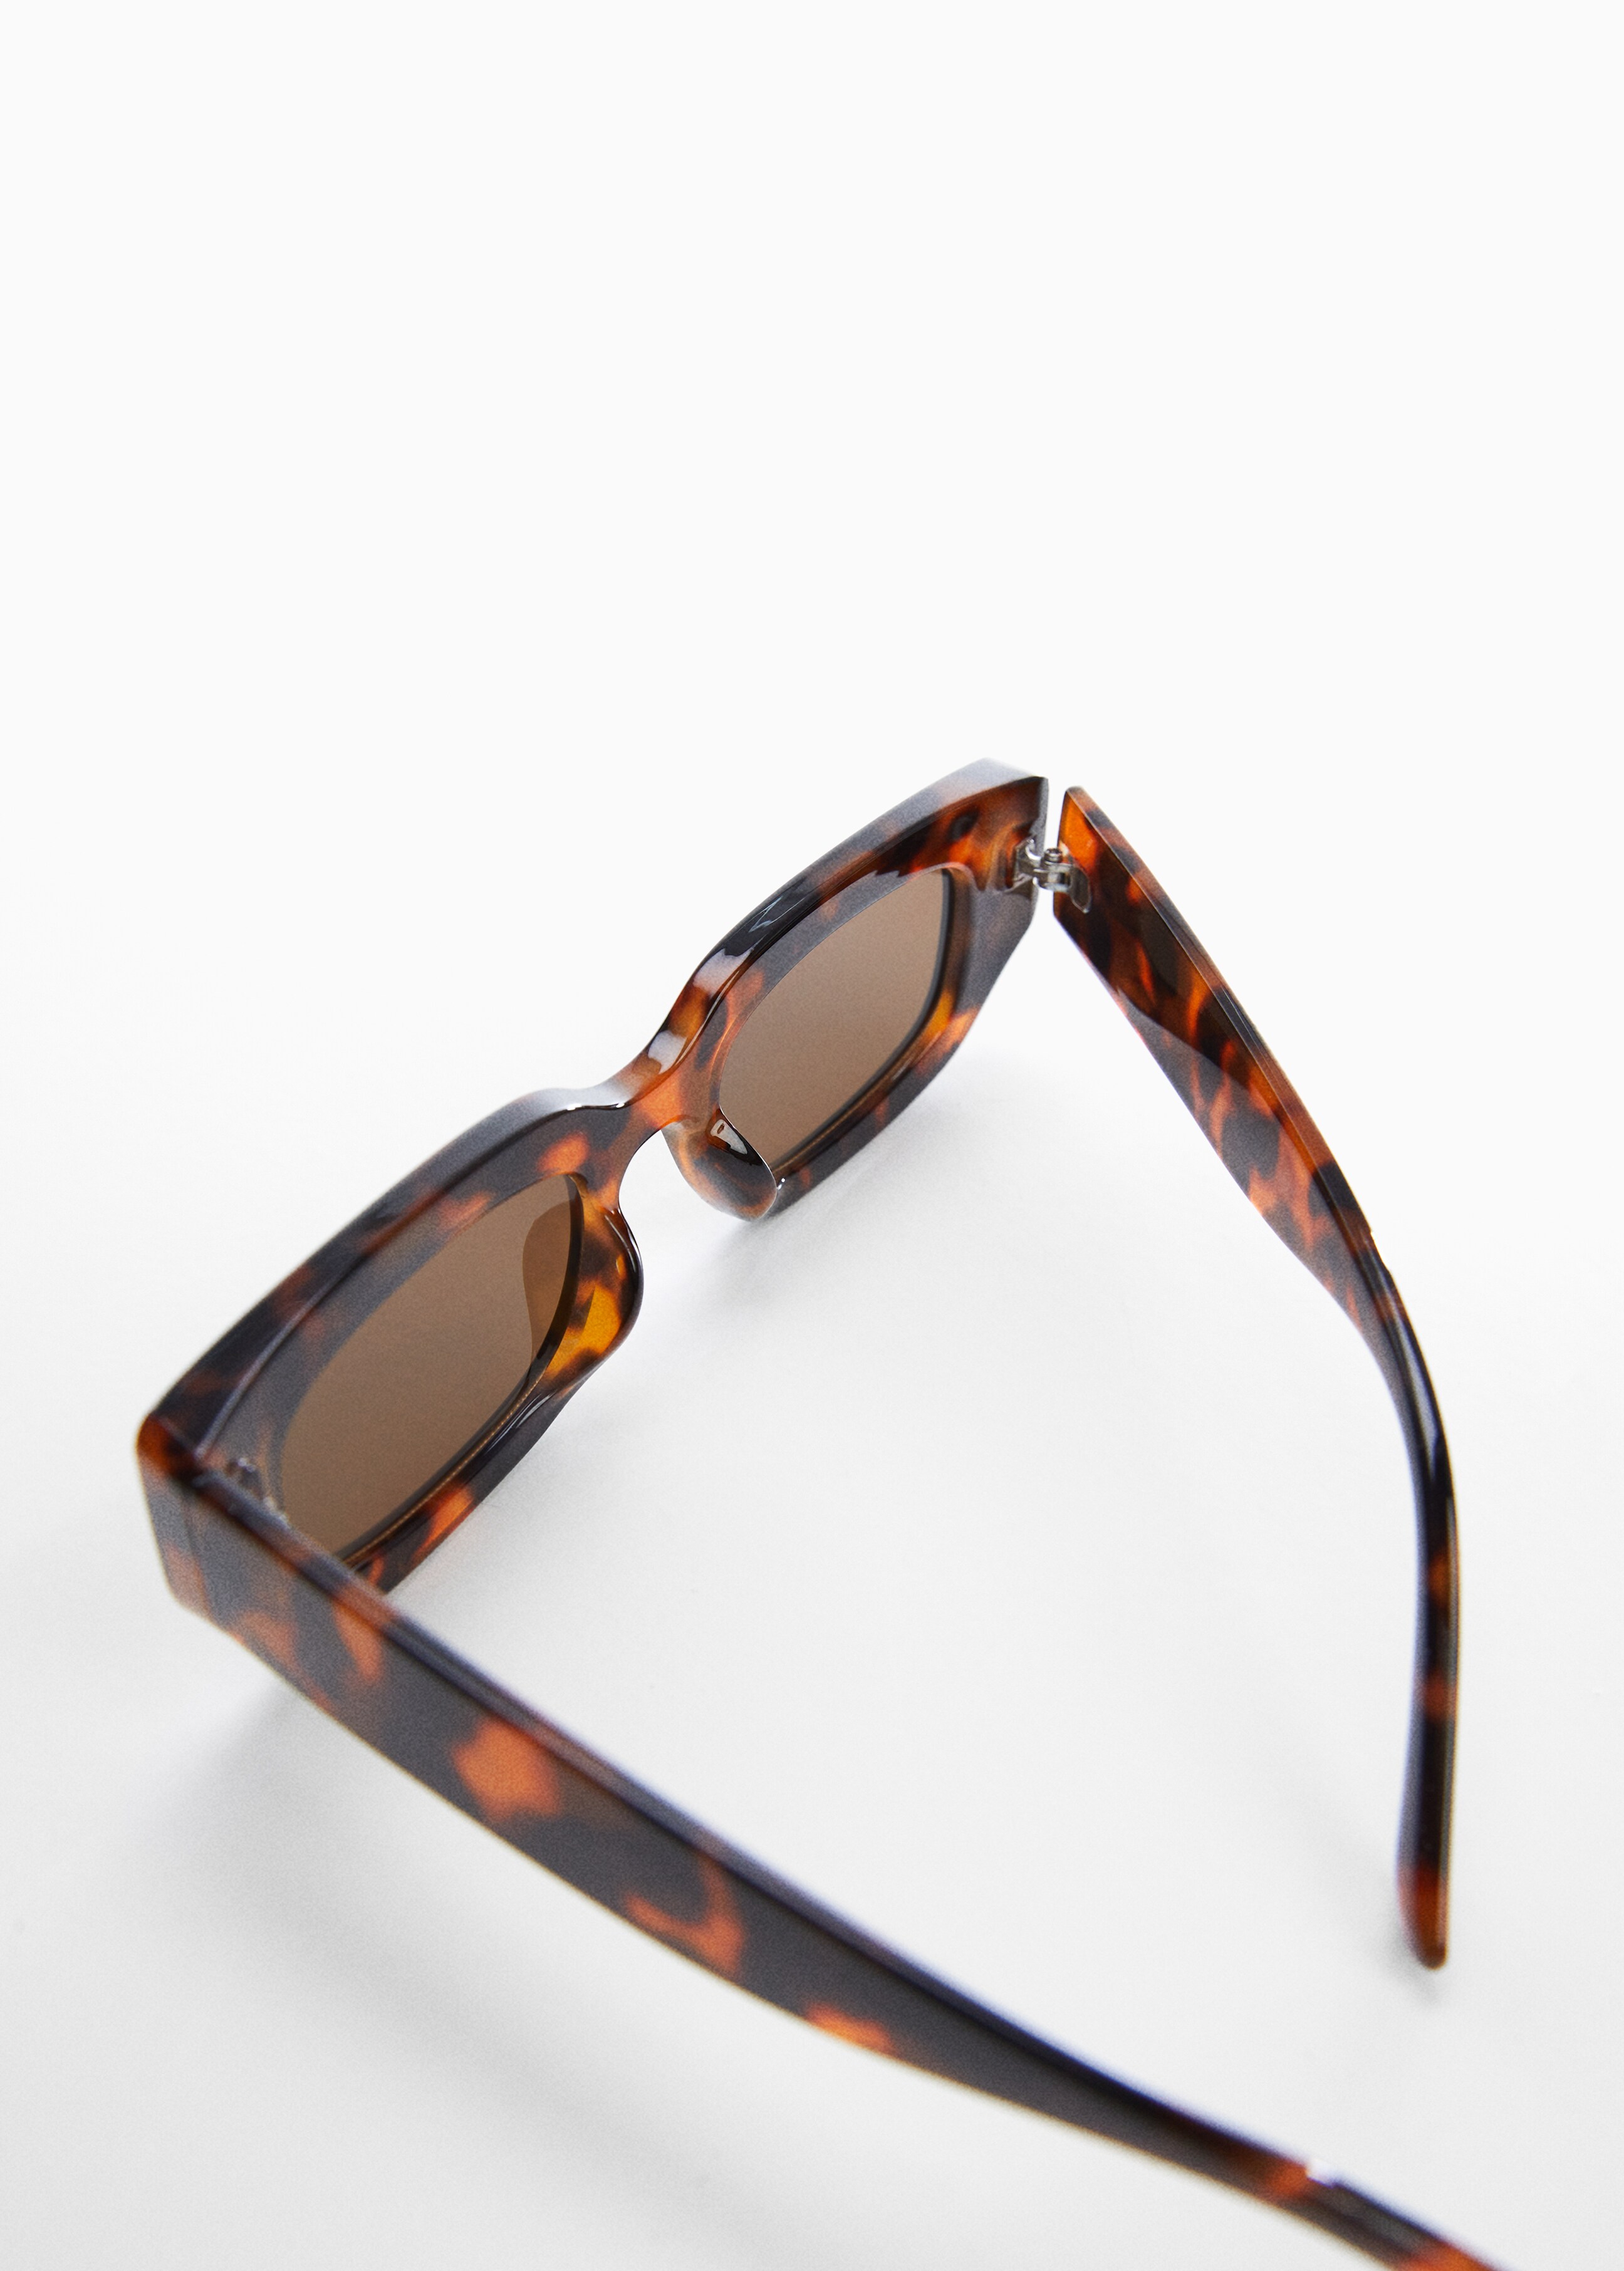 Rectangular sunglasses - Details of the article 1